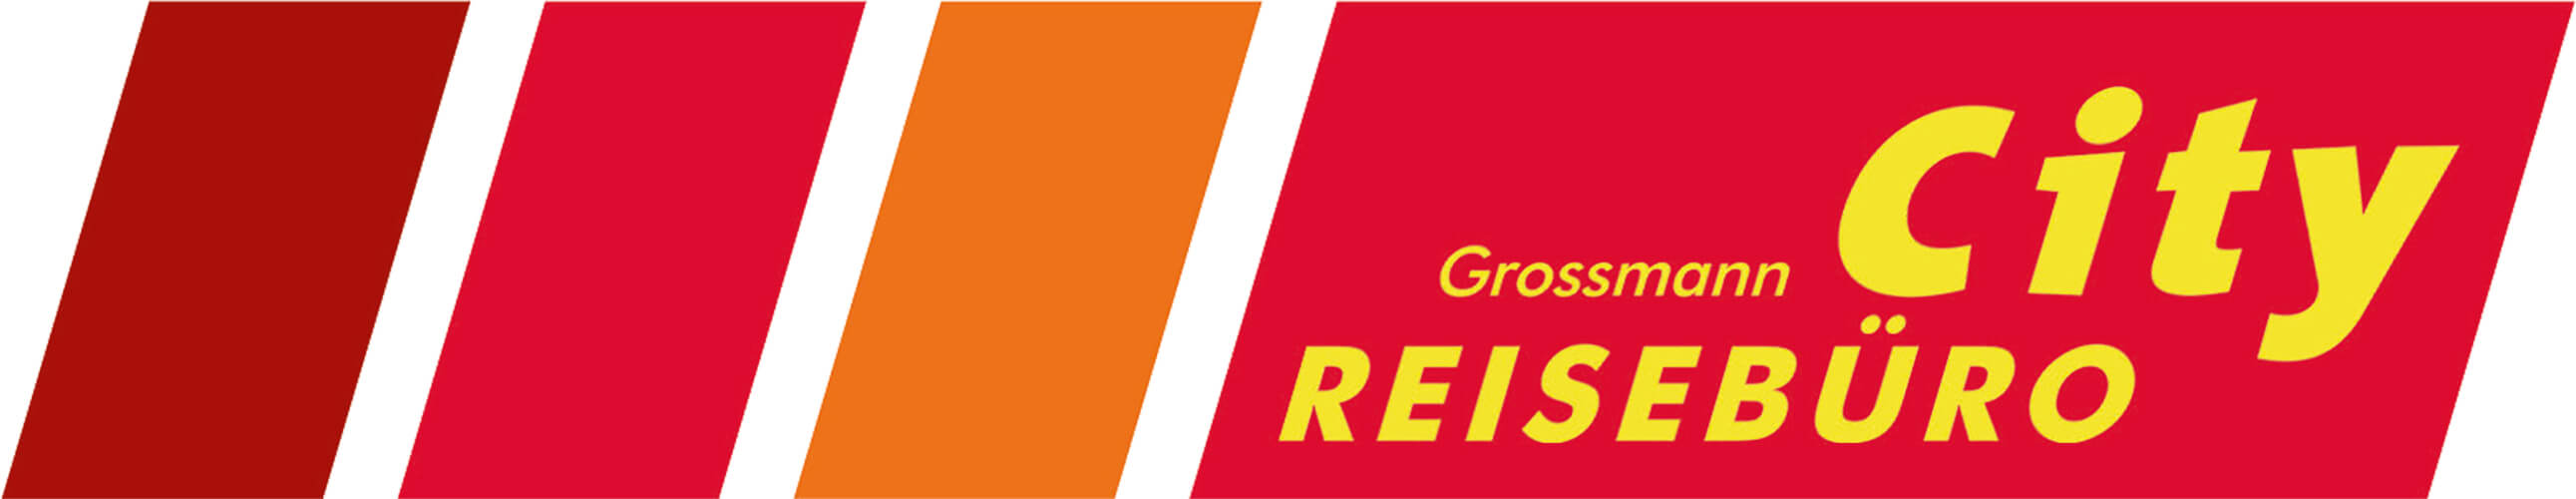 City Reisebüro Grossmann GmbH Logo